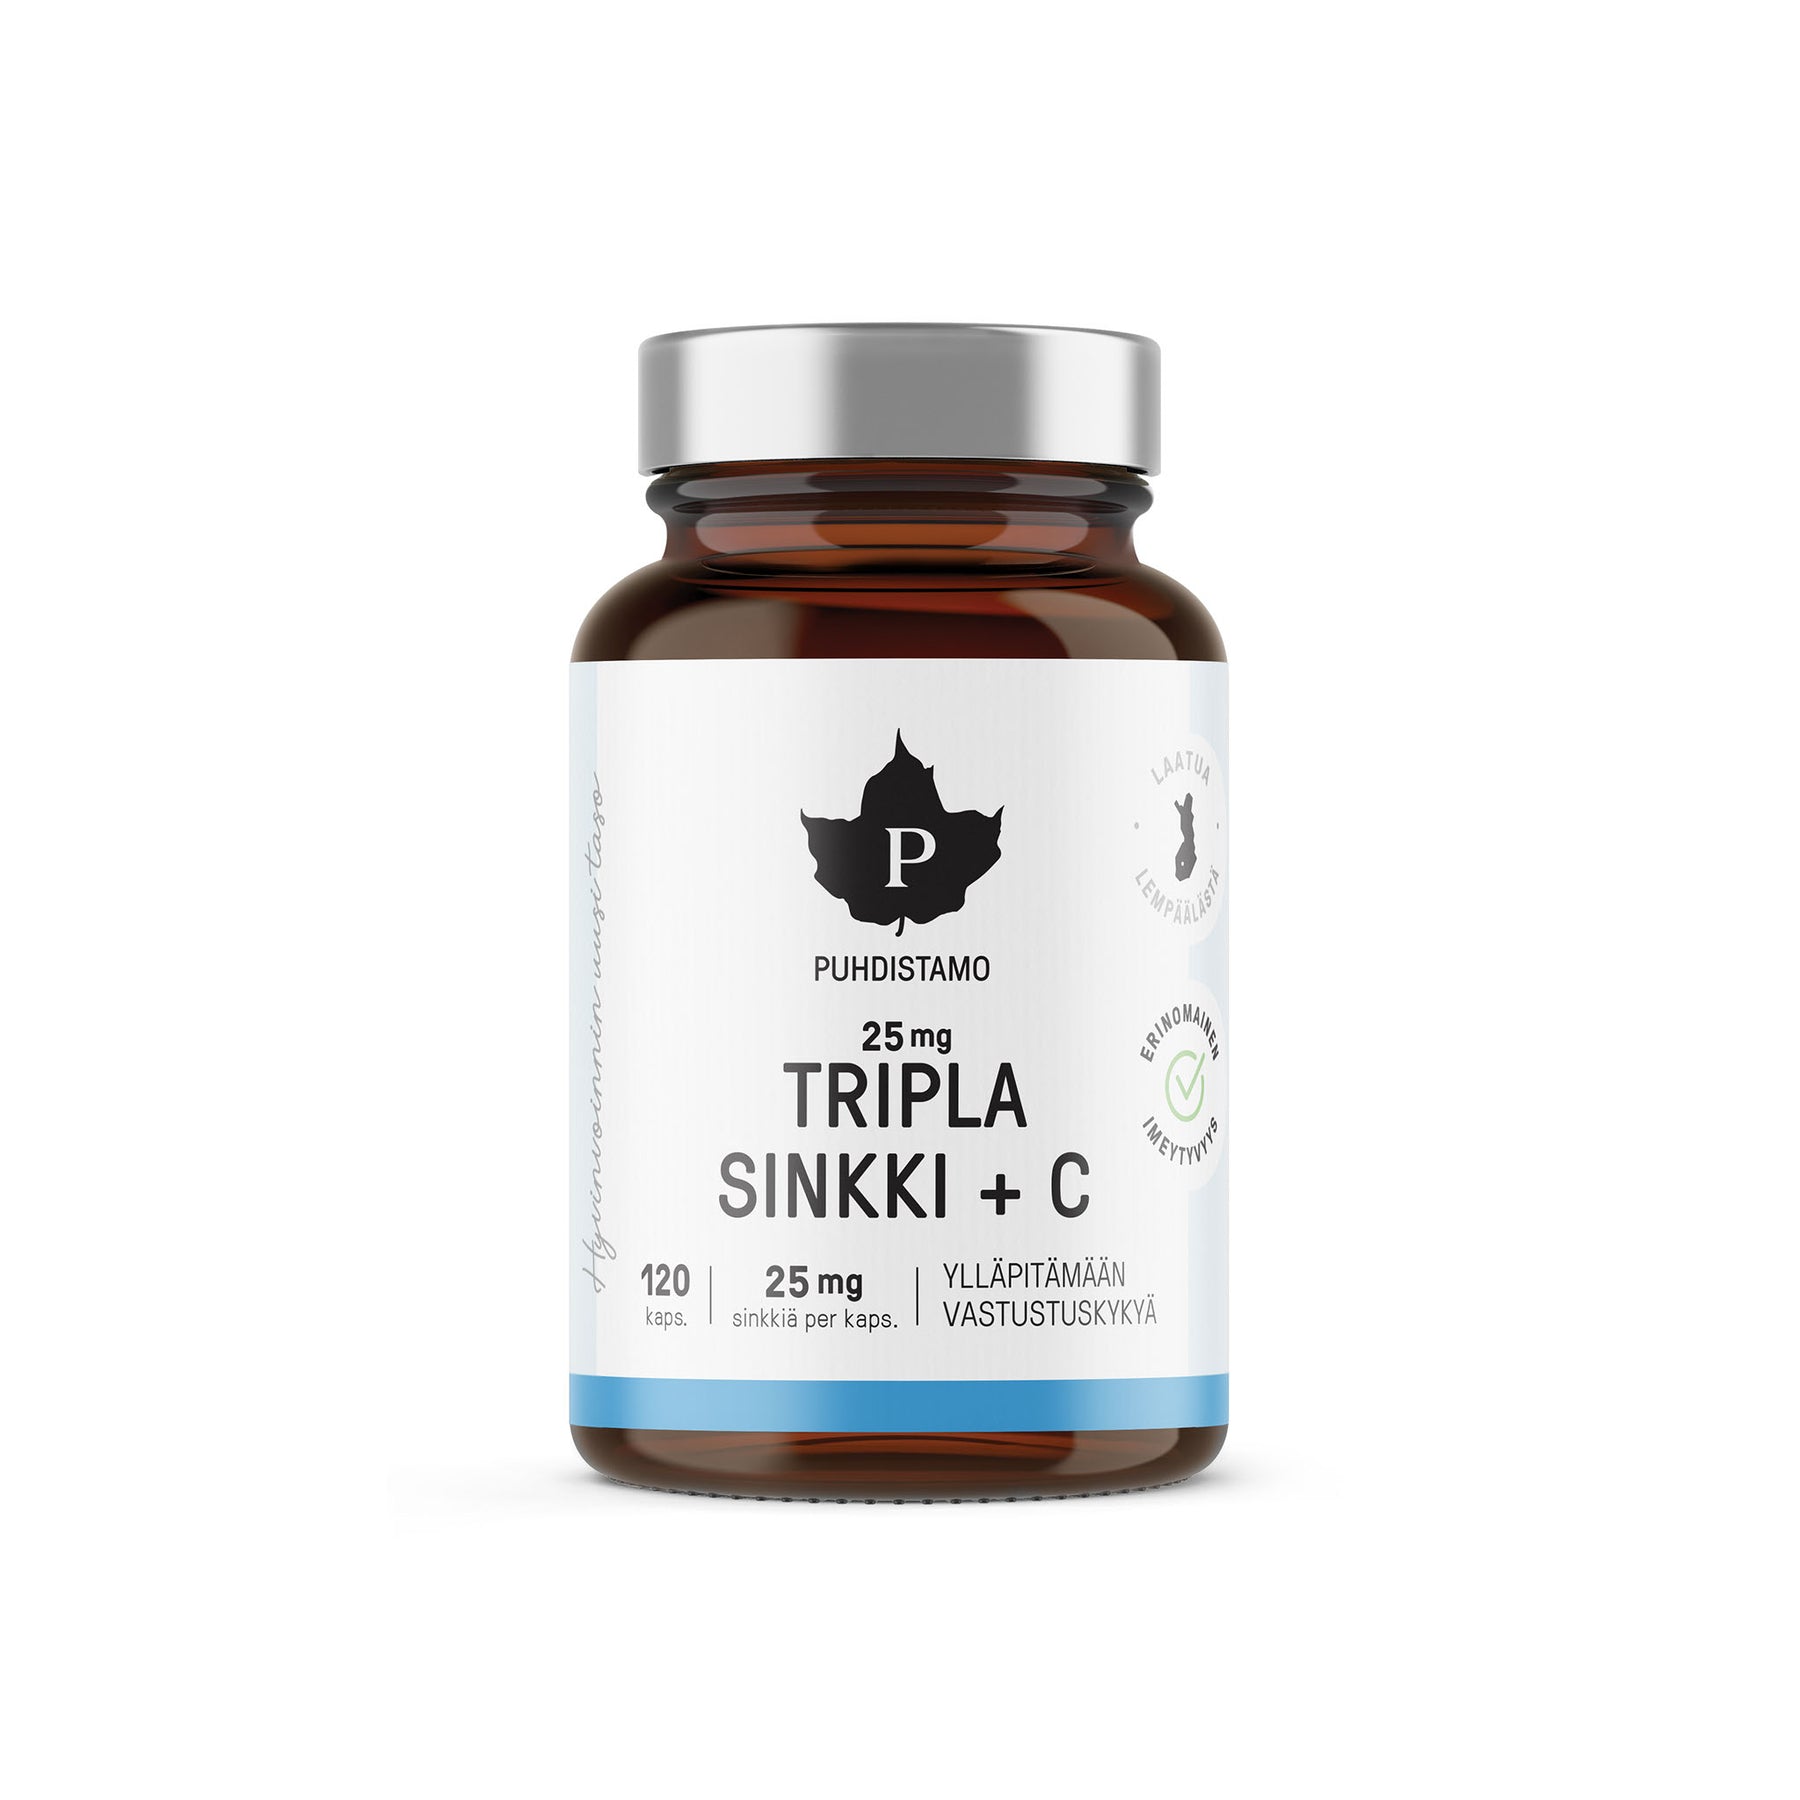 Puhdistamo Tripla Sinkki + C 25 mg 120 kaps.